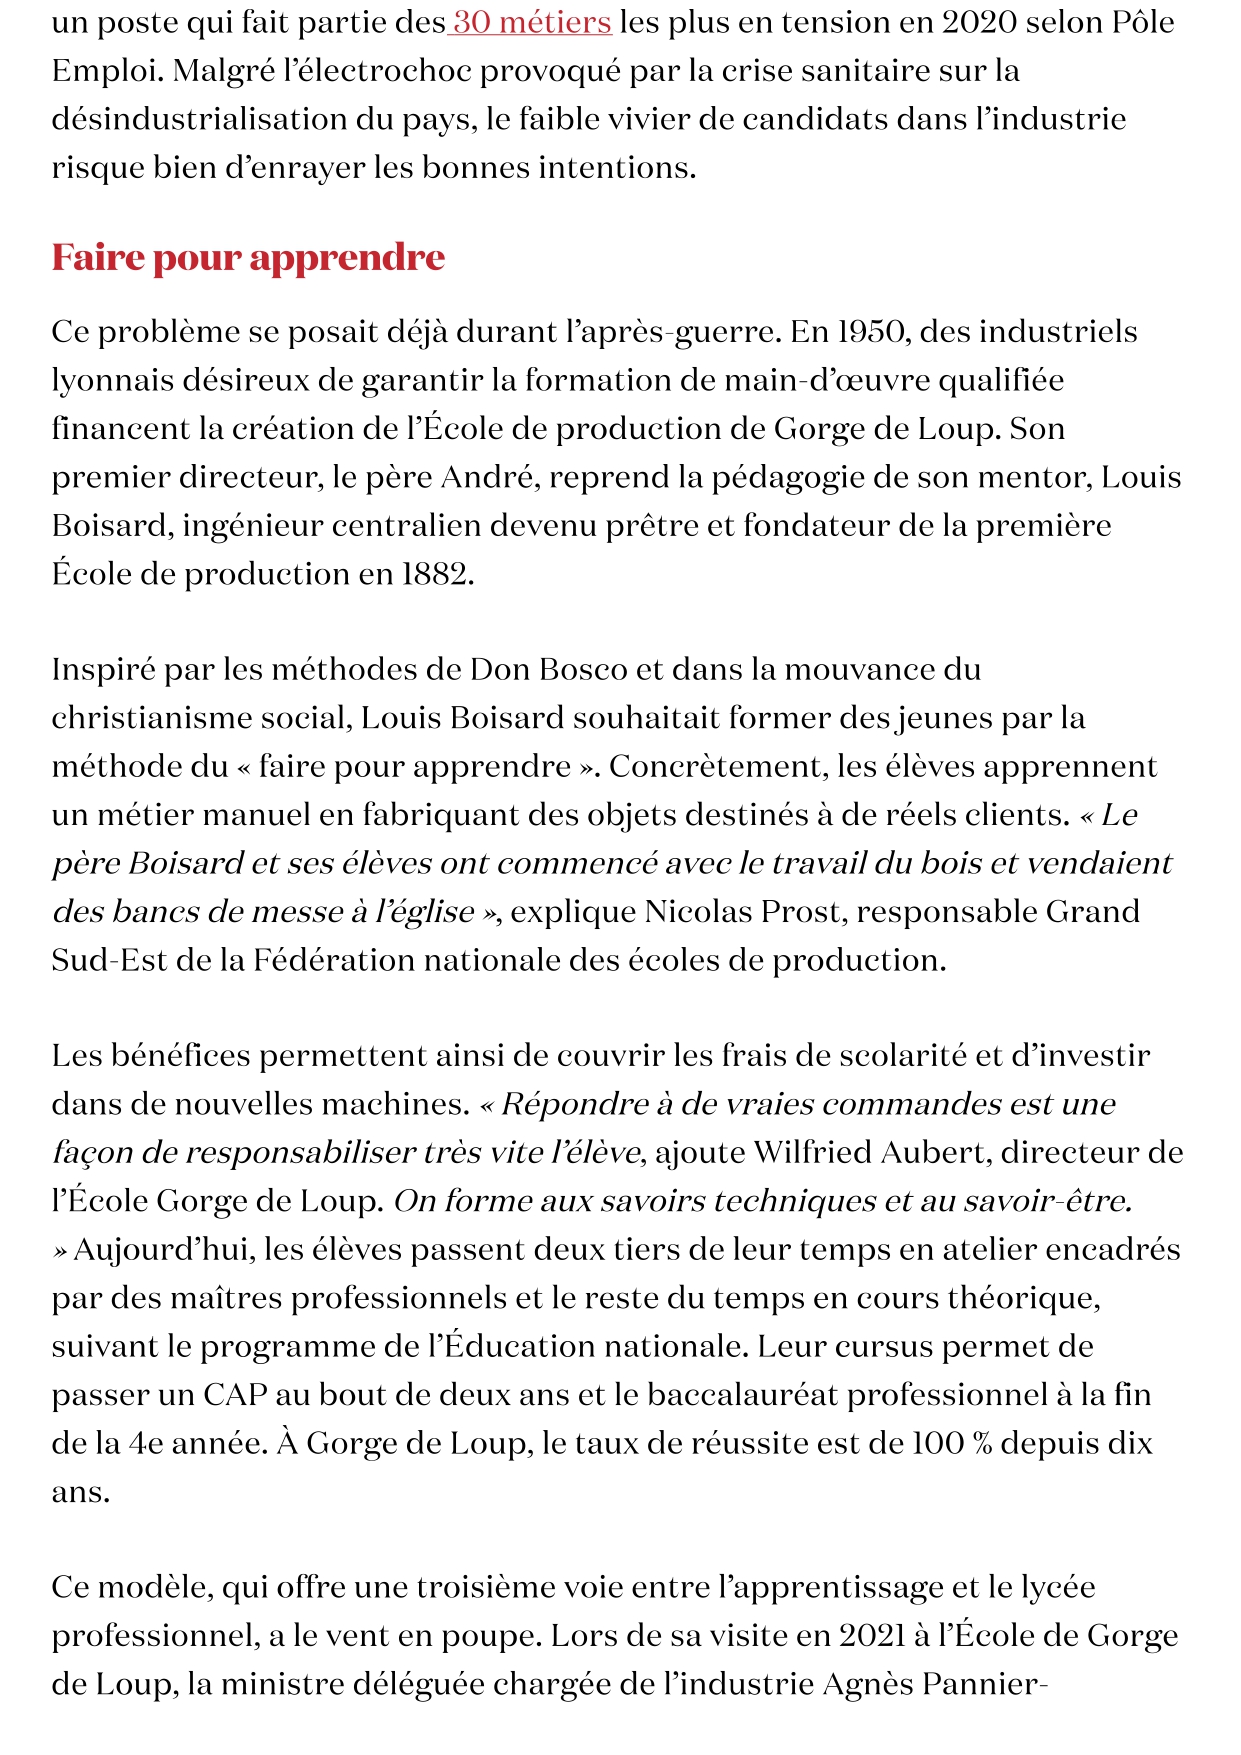 Article La Vie 17.03.2022 p.2